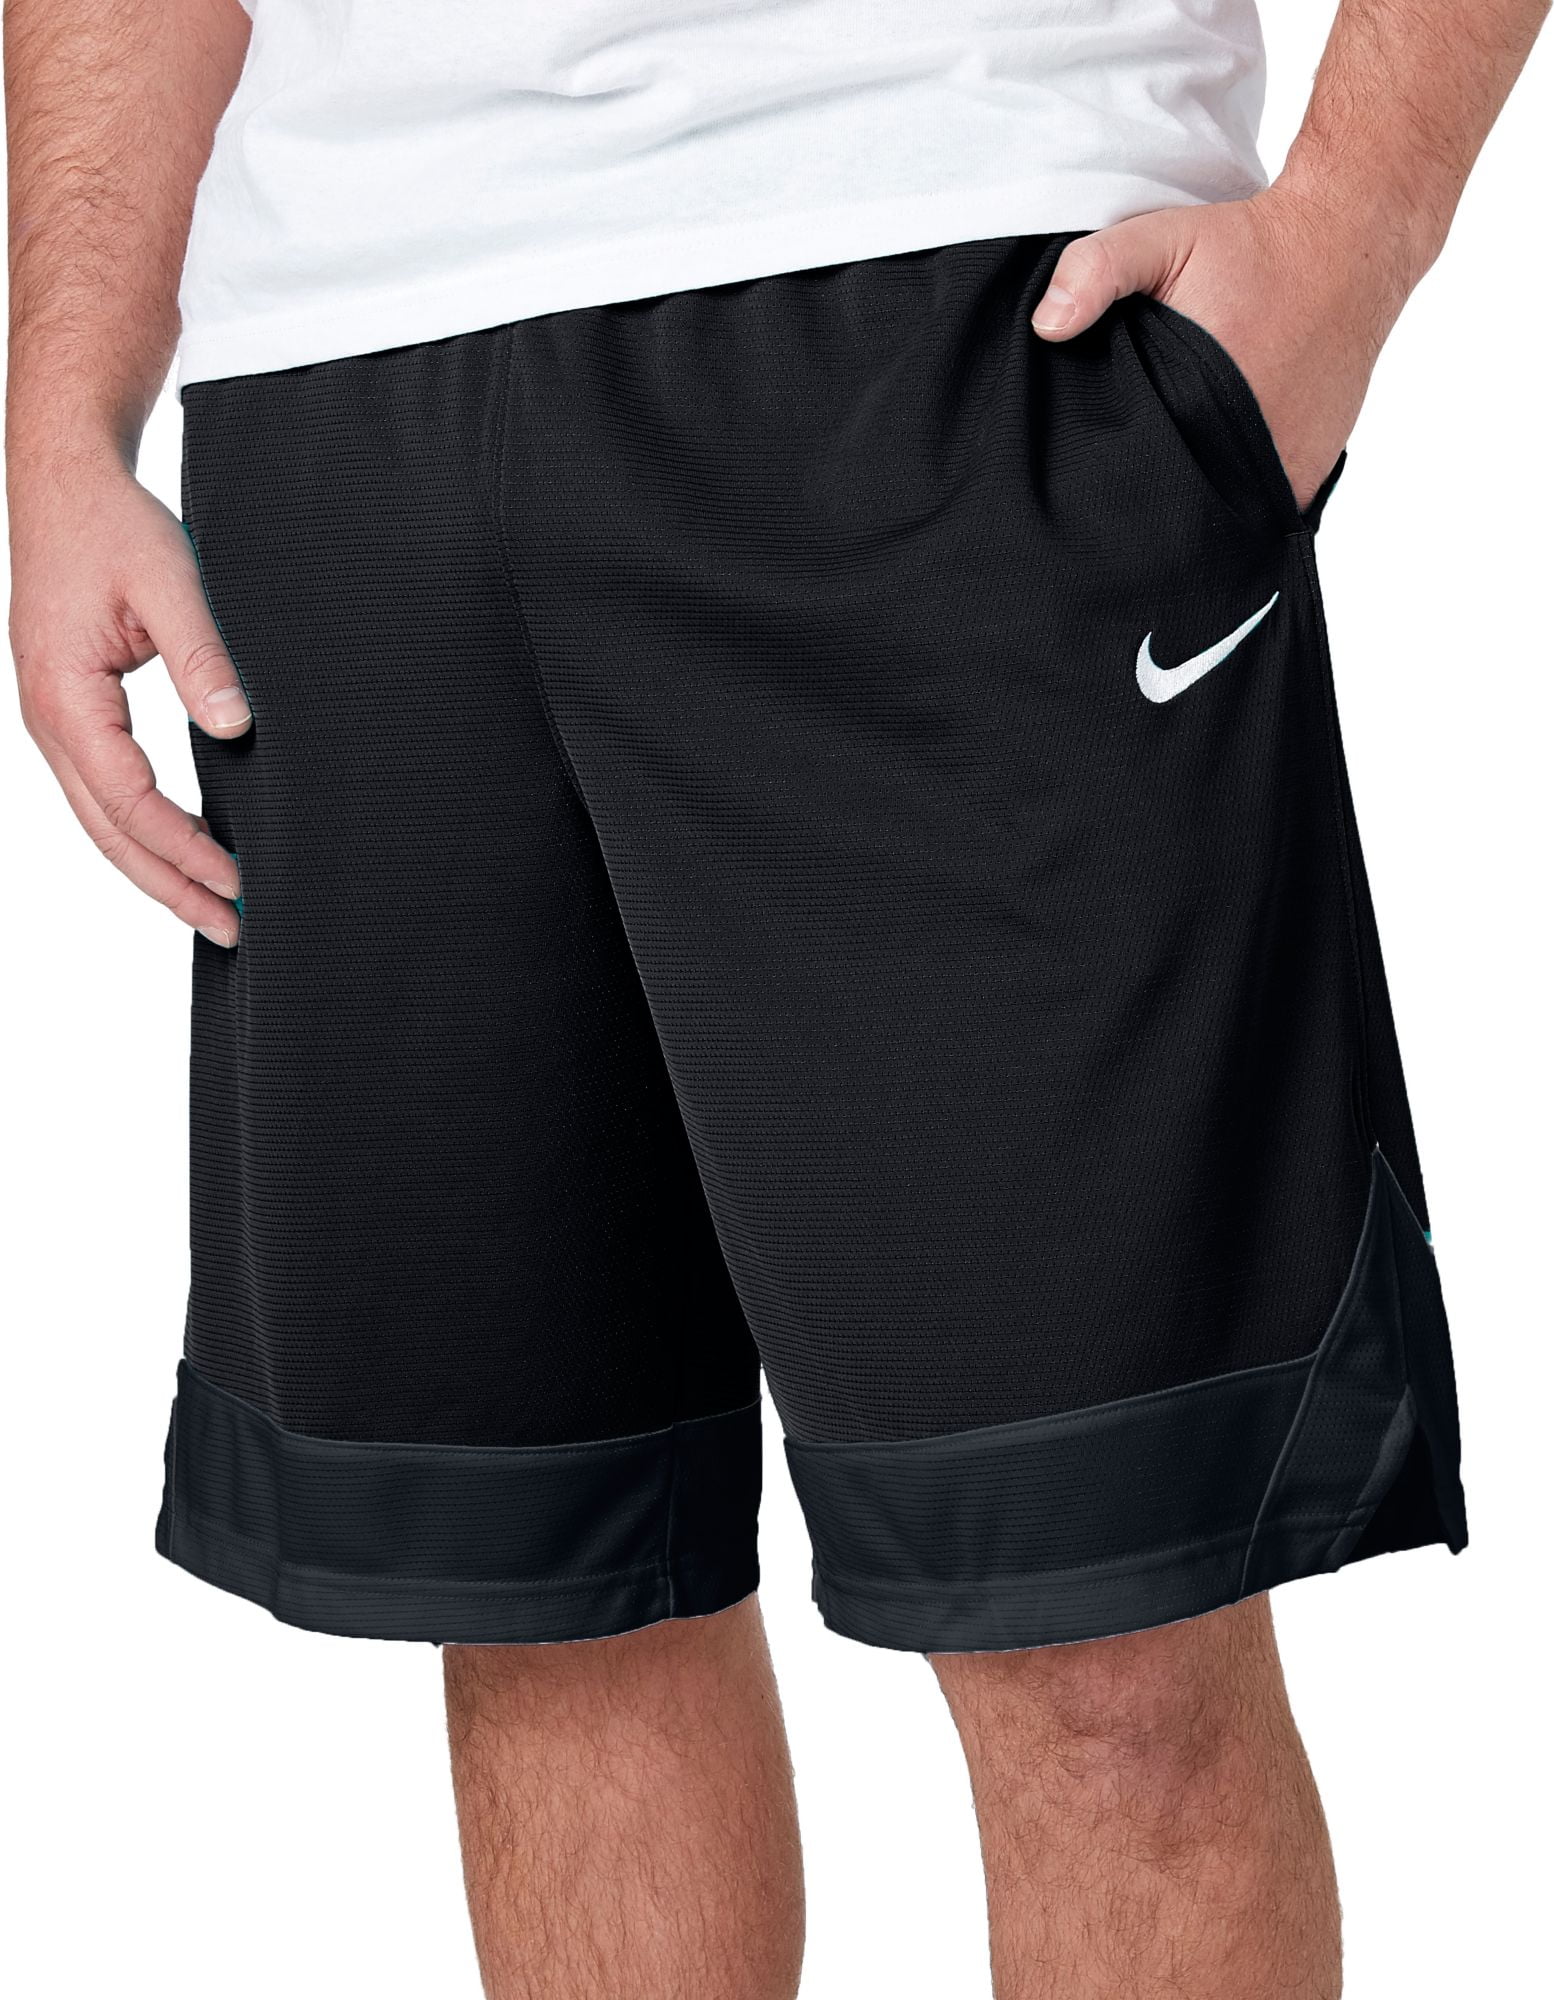 Nike Men's Shorts - Grey - S